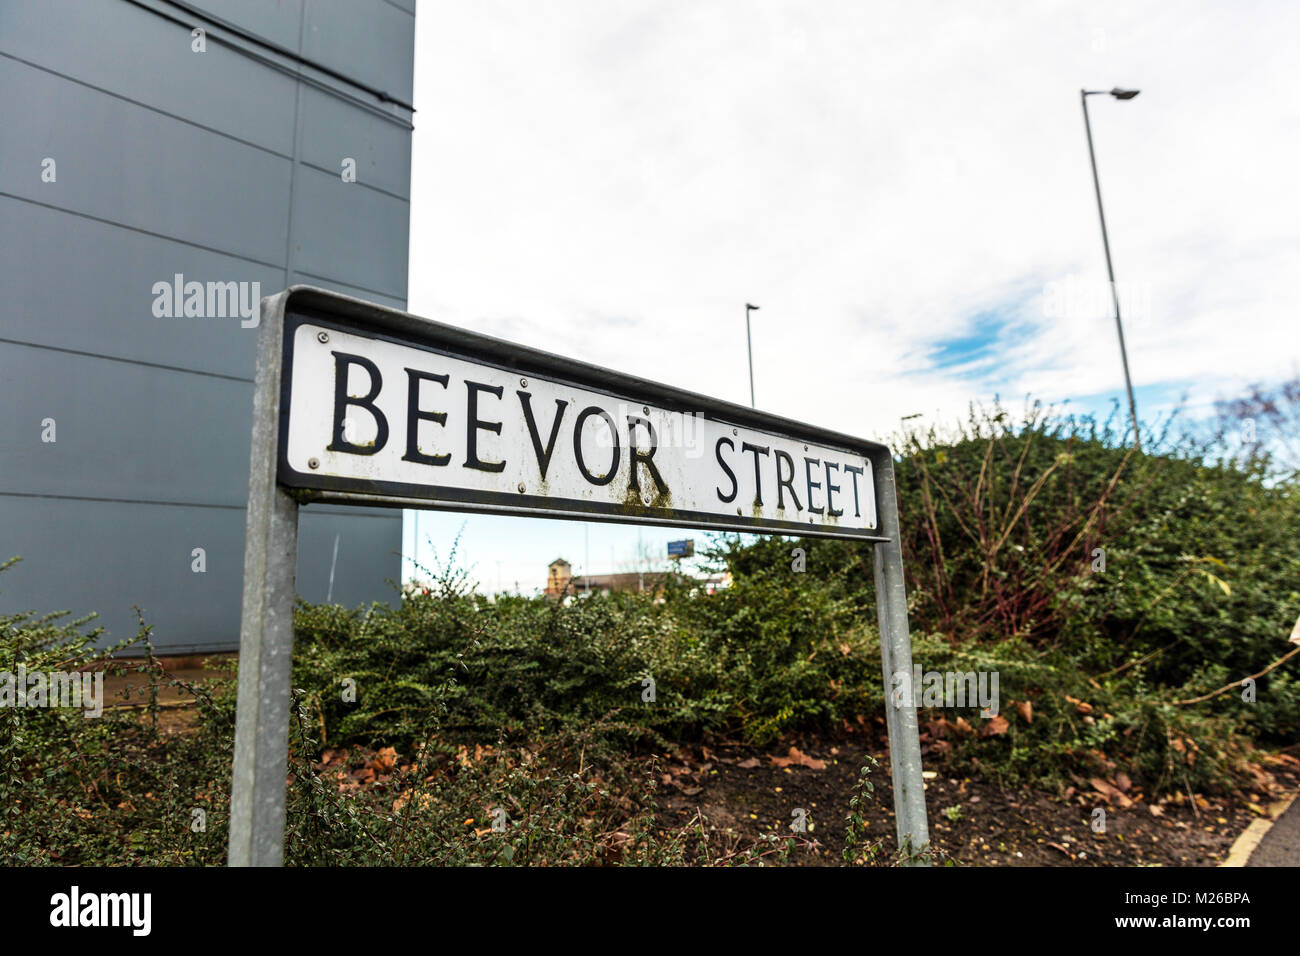 Beevor Street Lincoln City uk inglaterra, beaver, funny nombres de calle UK, Reino Unido, el nombre de la calle divertido gracioso nombre de calle uk, gracioso nombre de carretera UK, gracioso, divertido Foto de stock